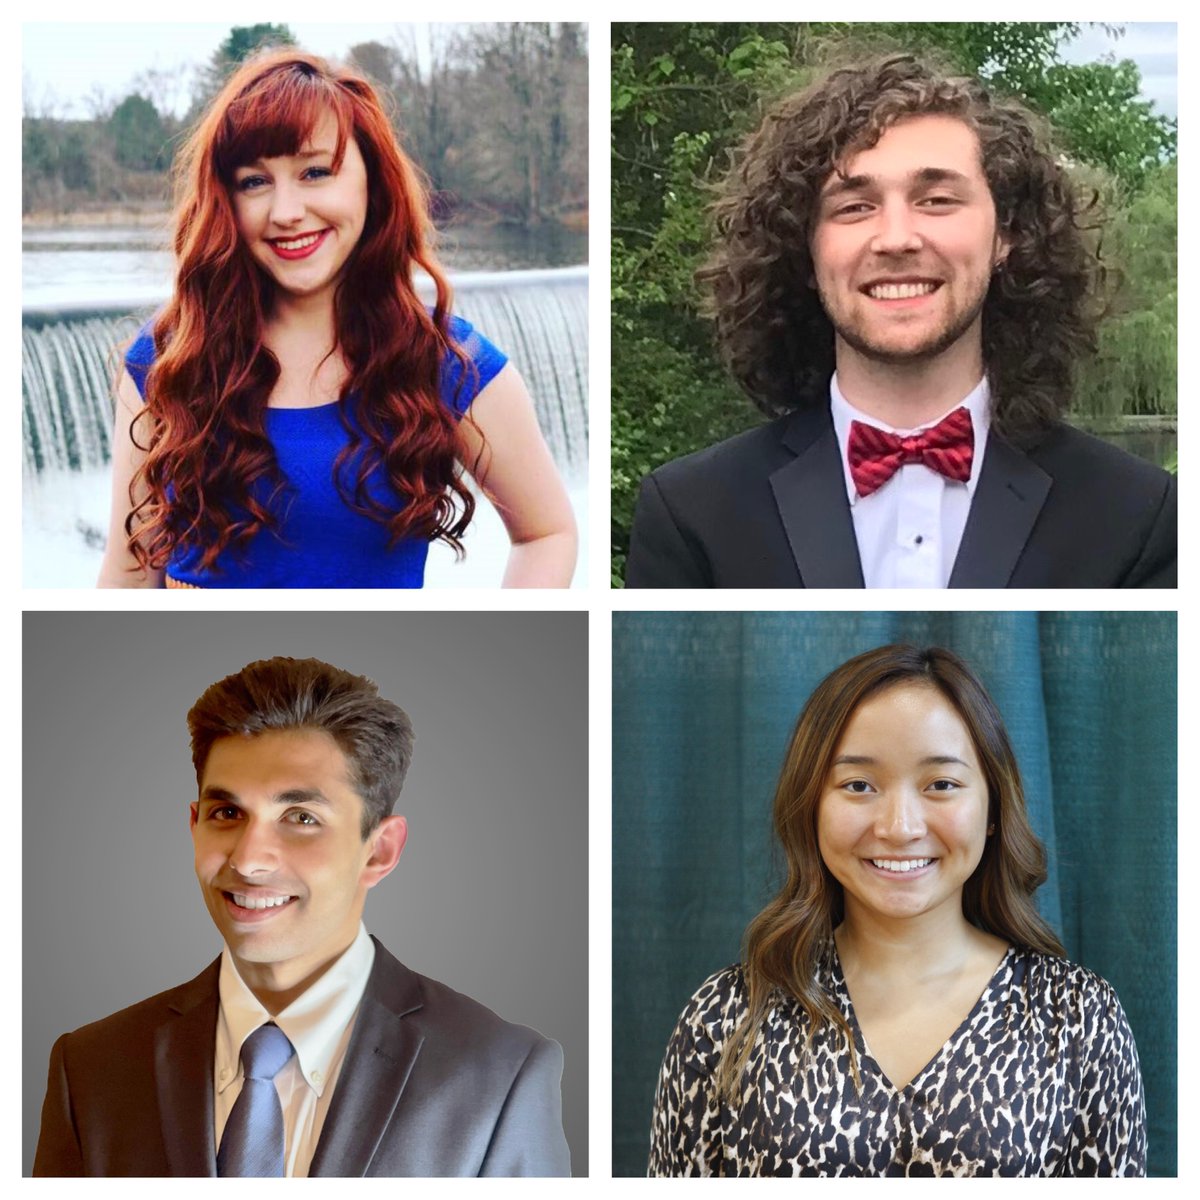 Through a partnership with @Knoxstartshere, HHS has welcomed 4 new summer interns! Meet Lindsey Lentocha, Isaac Mathew, Tony Potchernikov, and Kate Zhong 🌟